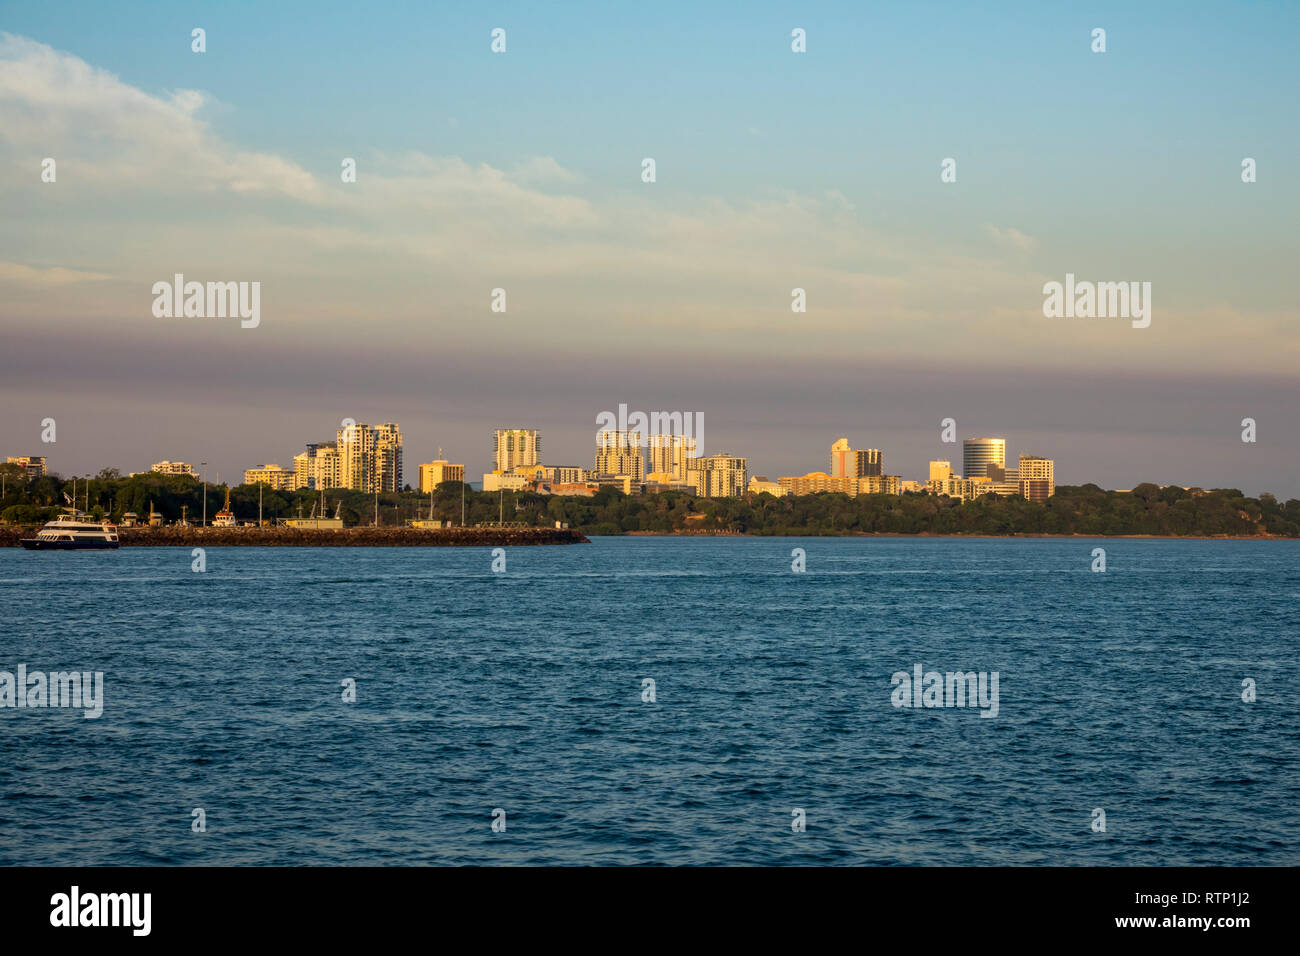 The city of Darwin at sundown, as seen from ship departing Darwin Port, Northern Territory, Australia Stock Photo